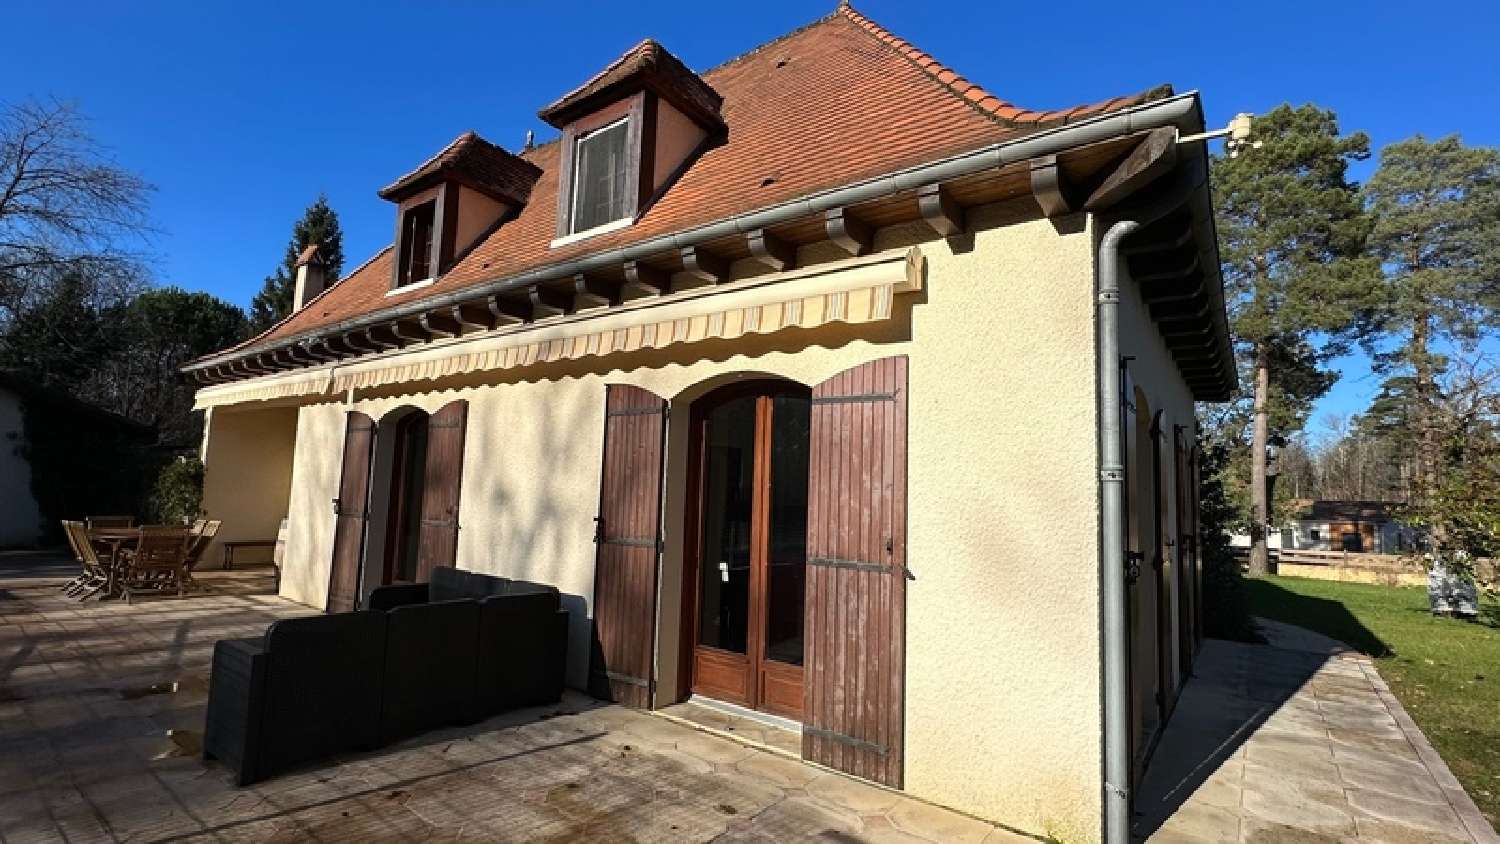  à vendre maison Bergerac Dordogne 4